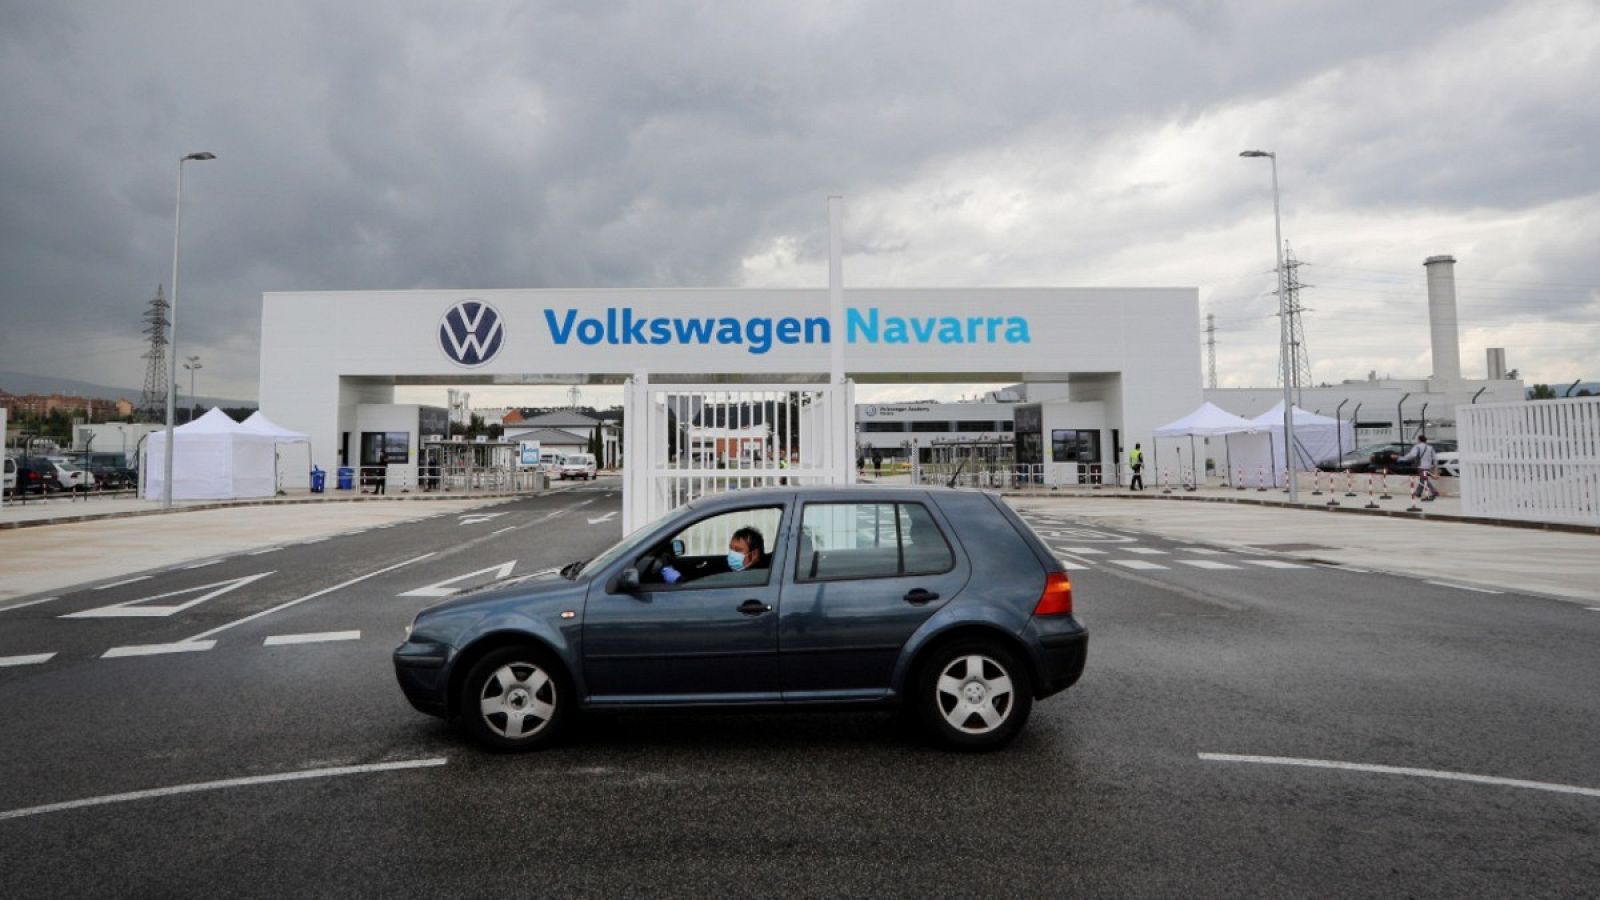 Imagen de la planta navarra de Volkswagen.